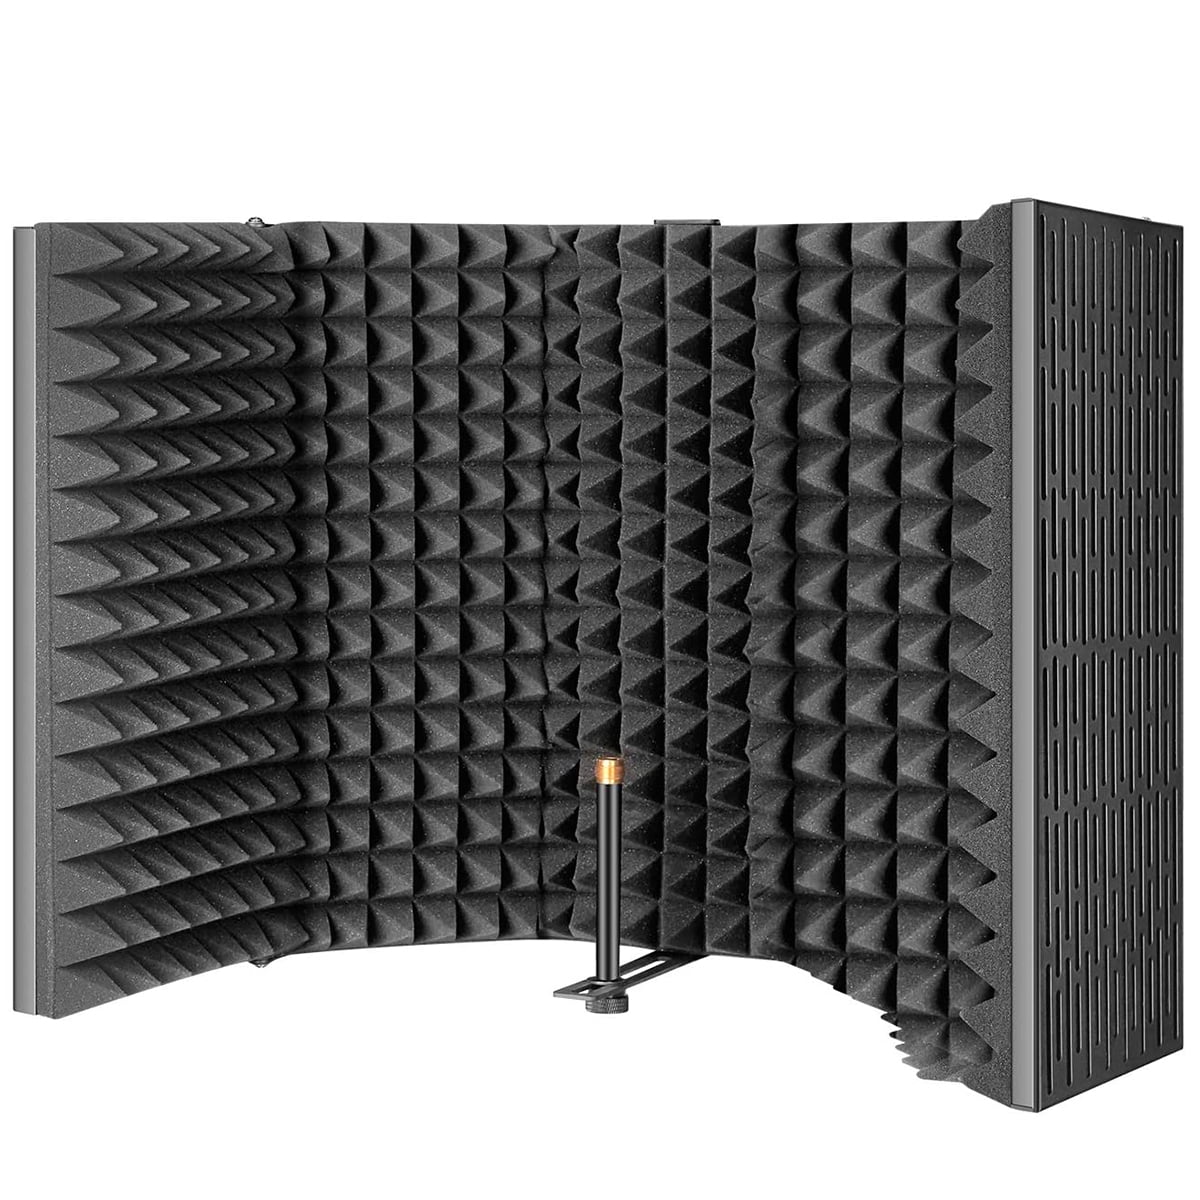 Acoustic Panel Studio Foam Sponge Sound Absorption Microphone Shield Treatment